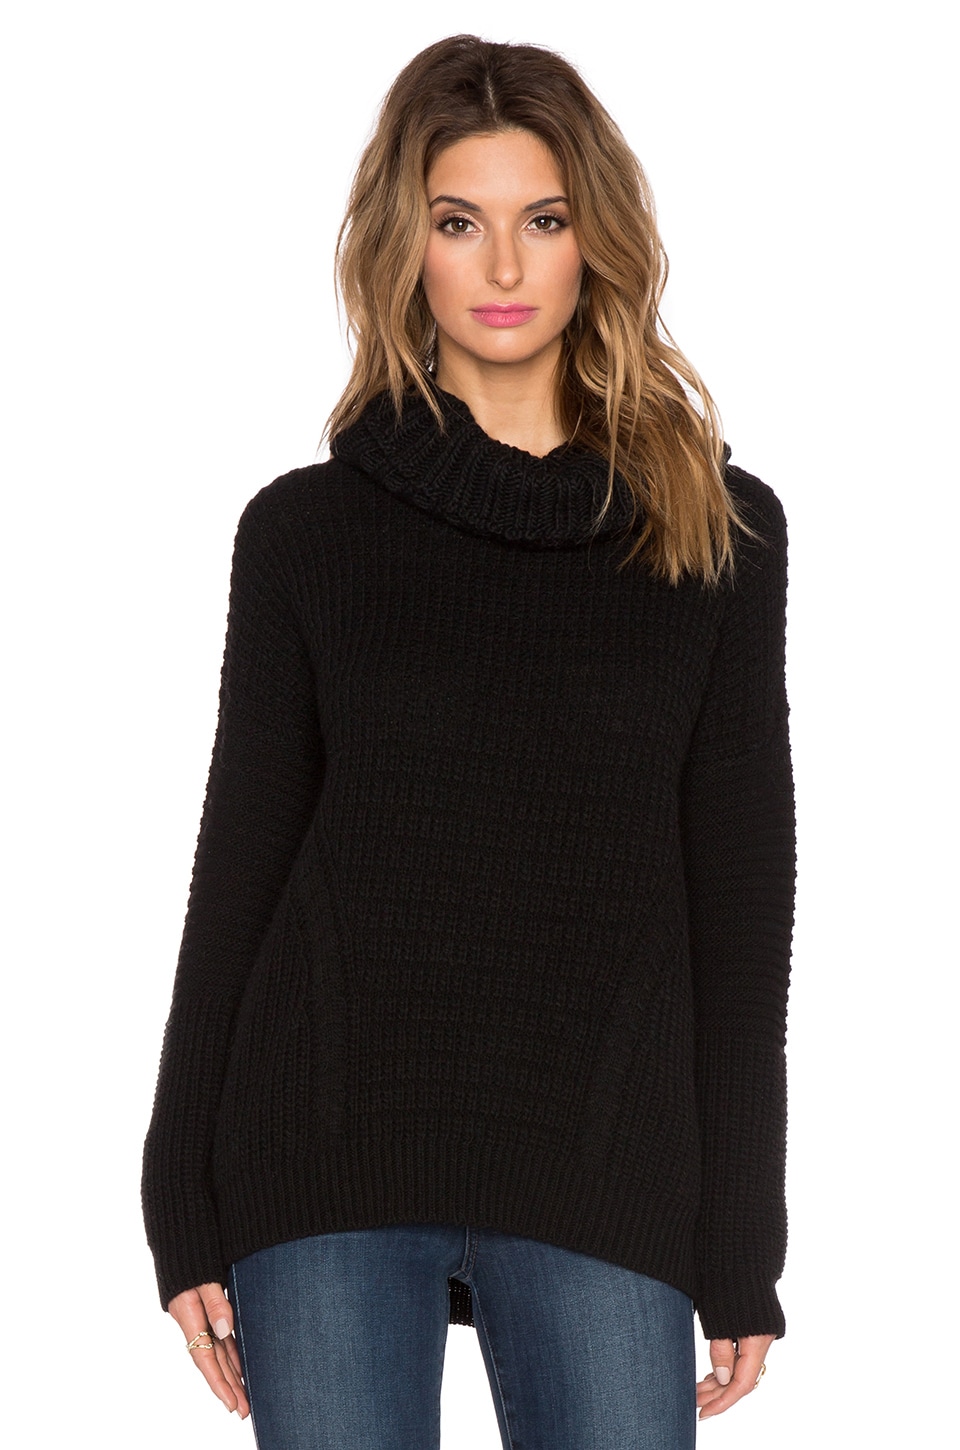 Essentiel Antwerp Kenai Sweater in Black | REVOLVE